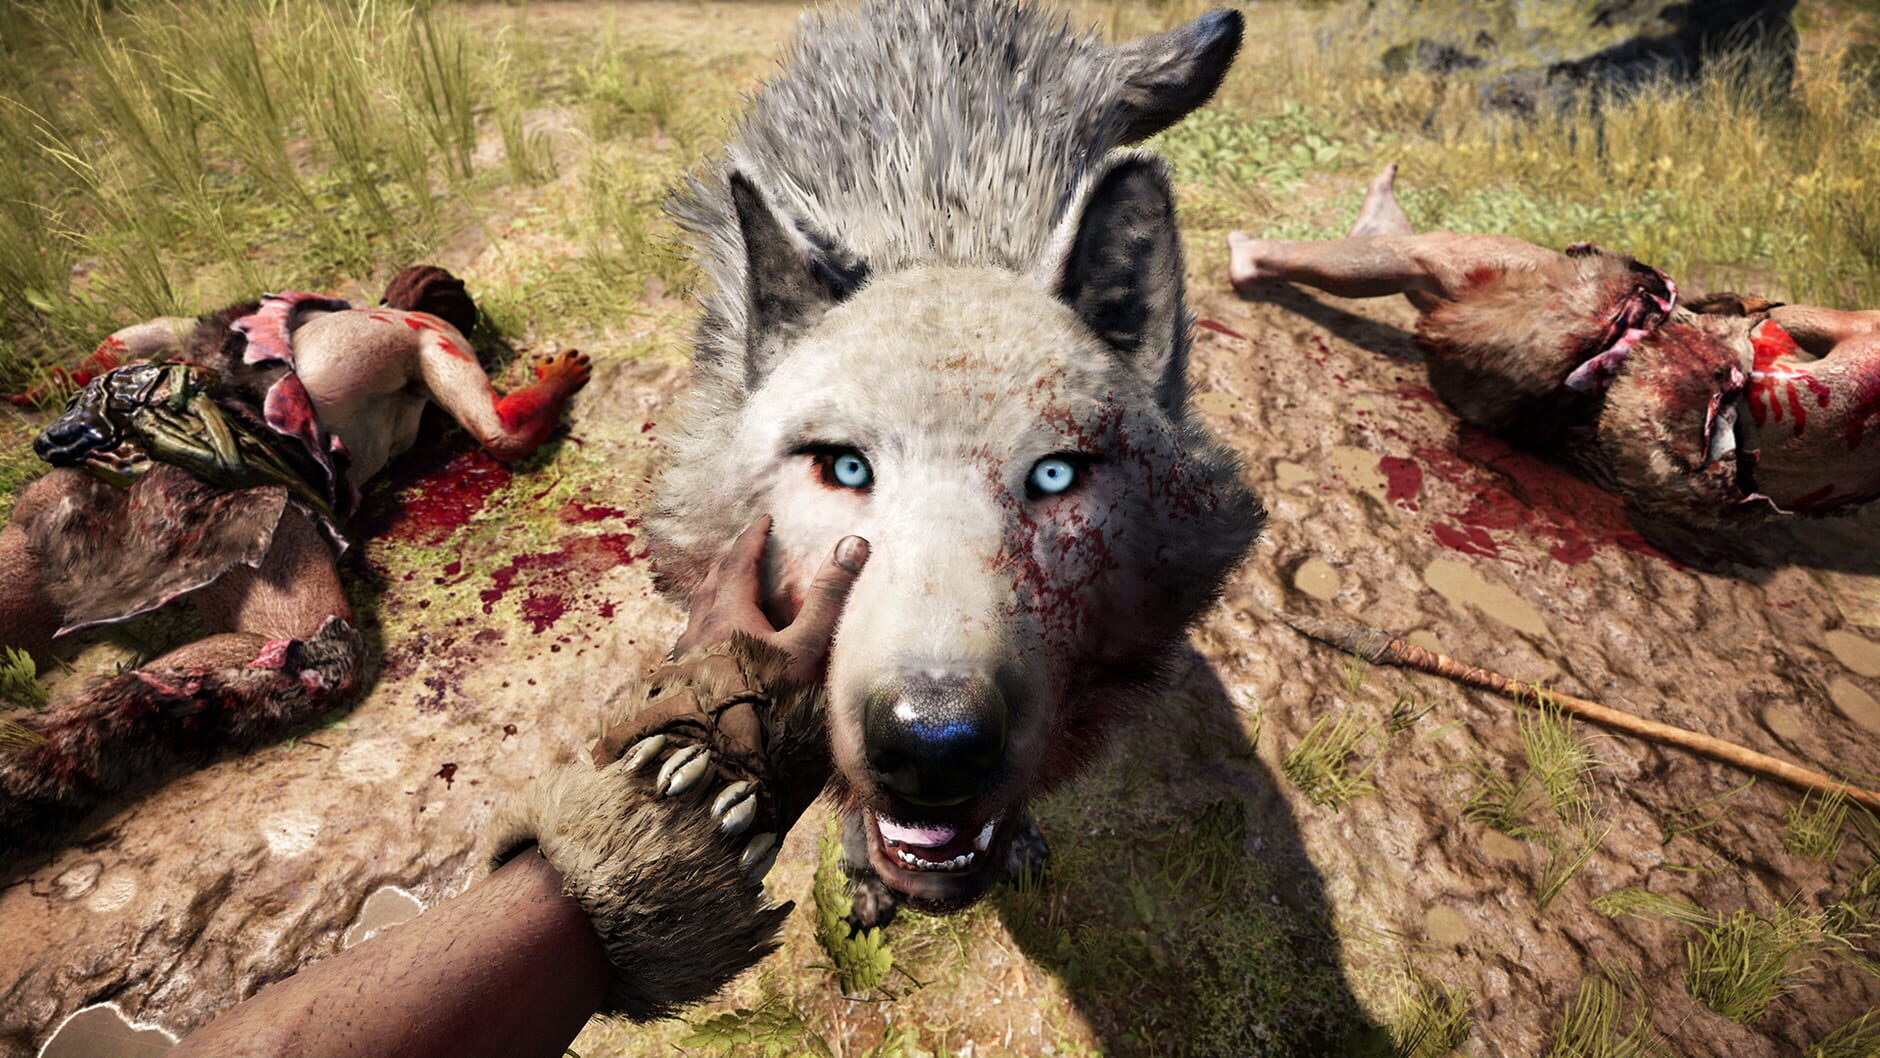 Screenshot for Far Cry: Primal